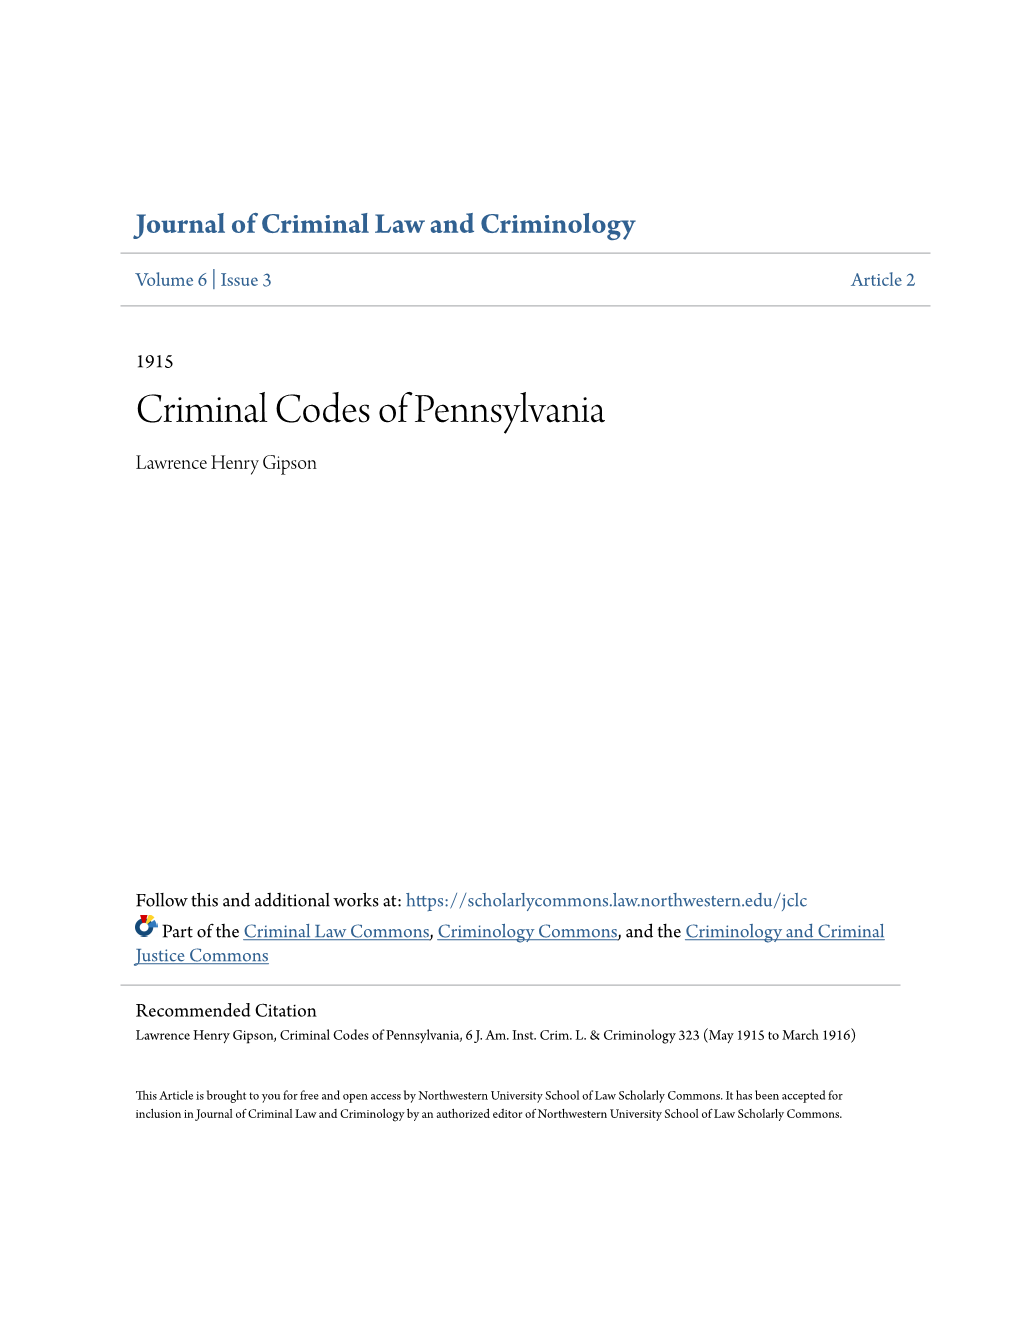 Criminal Codes of Pennsylvania Lawrence Henry Gipson